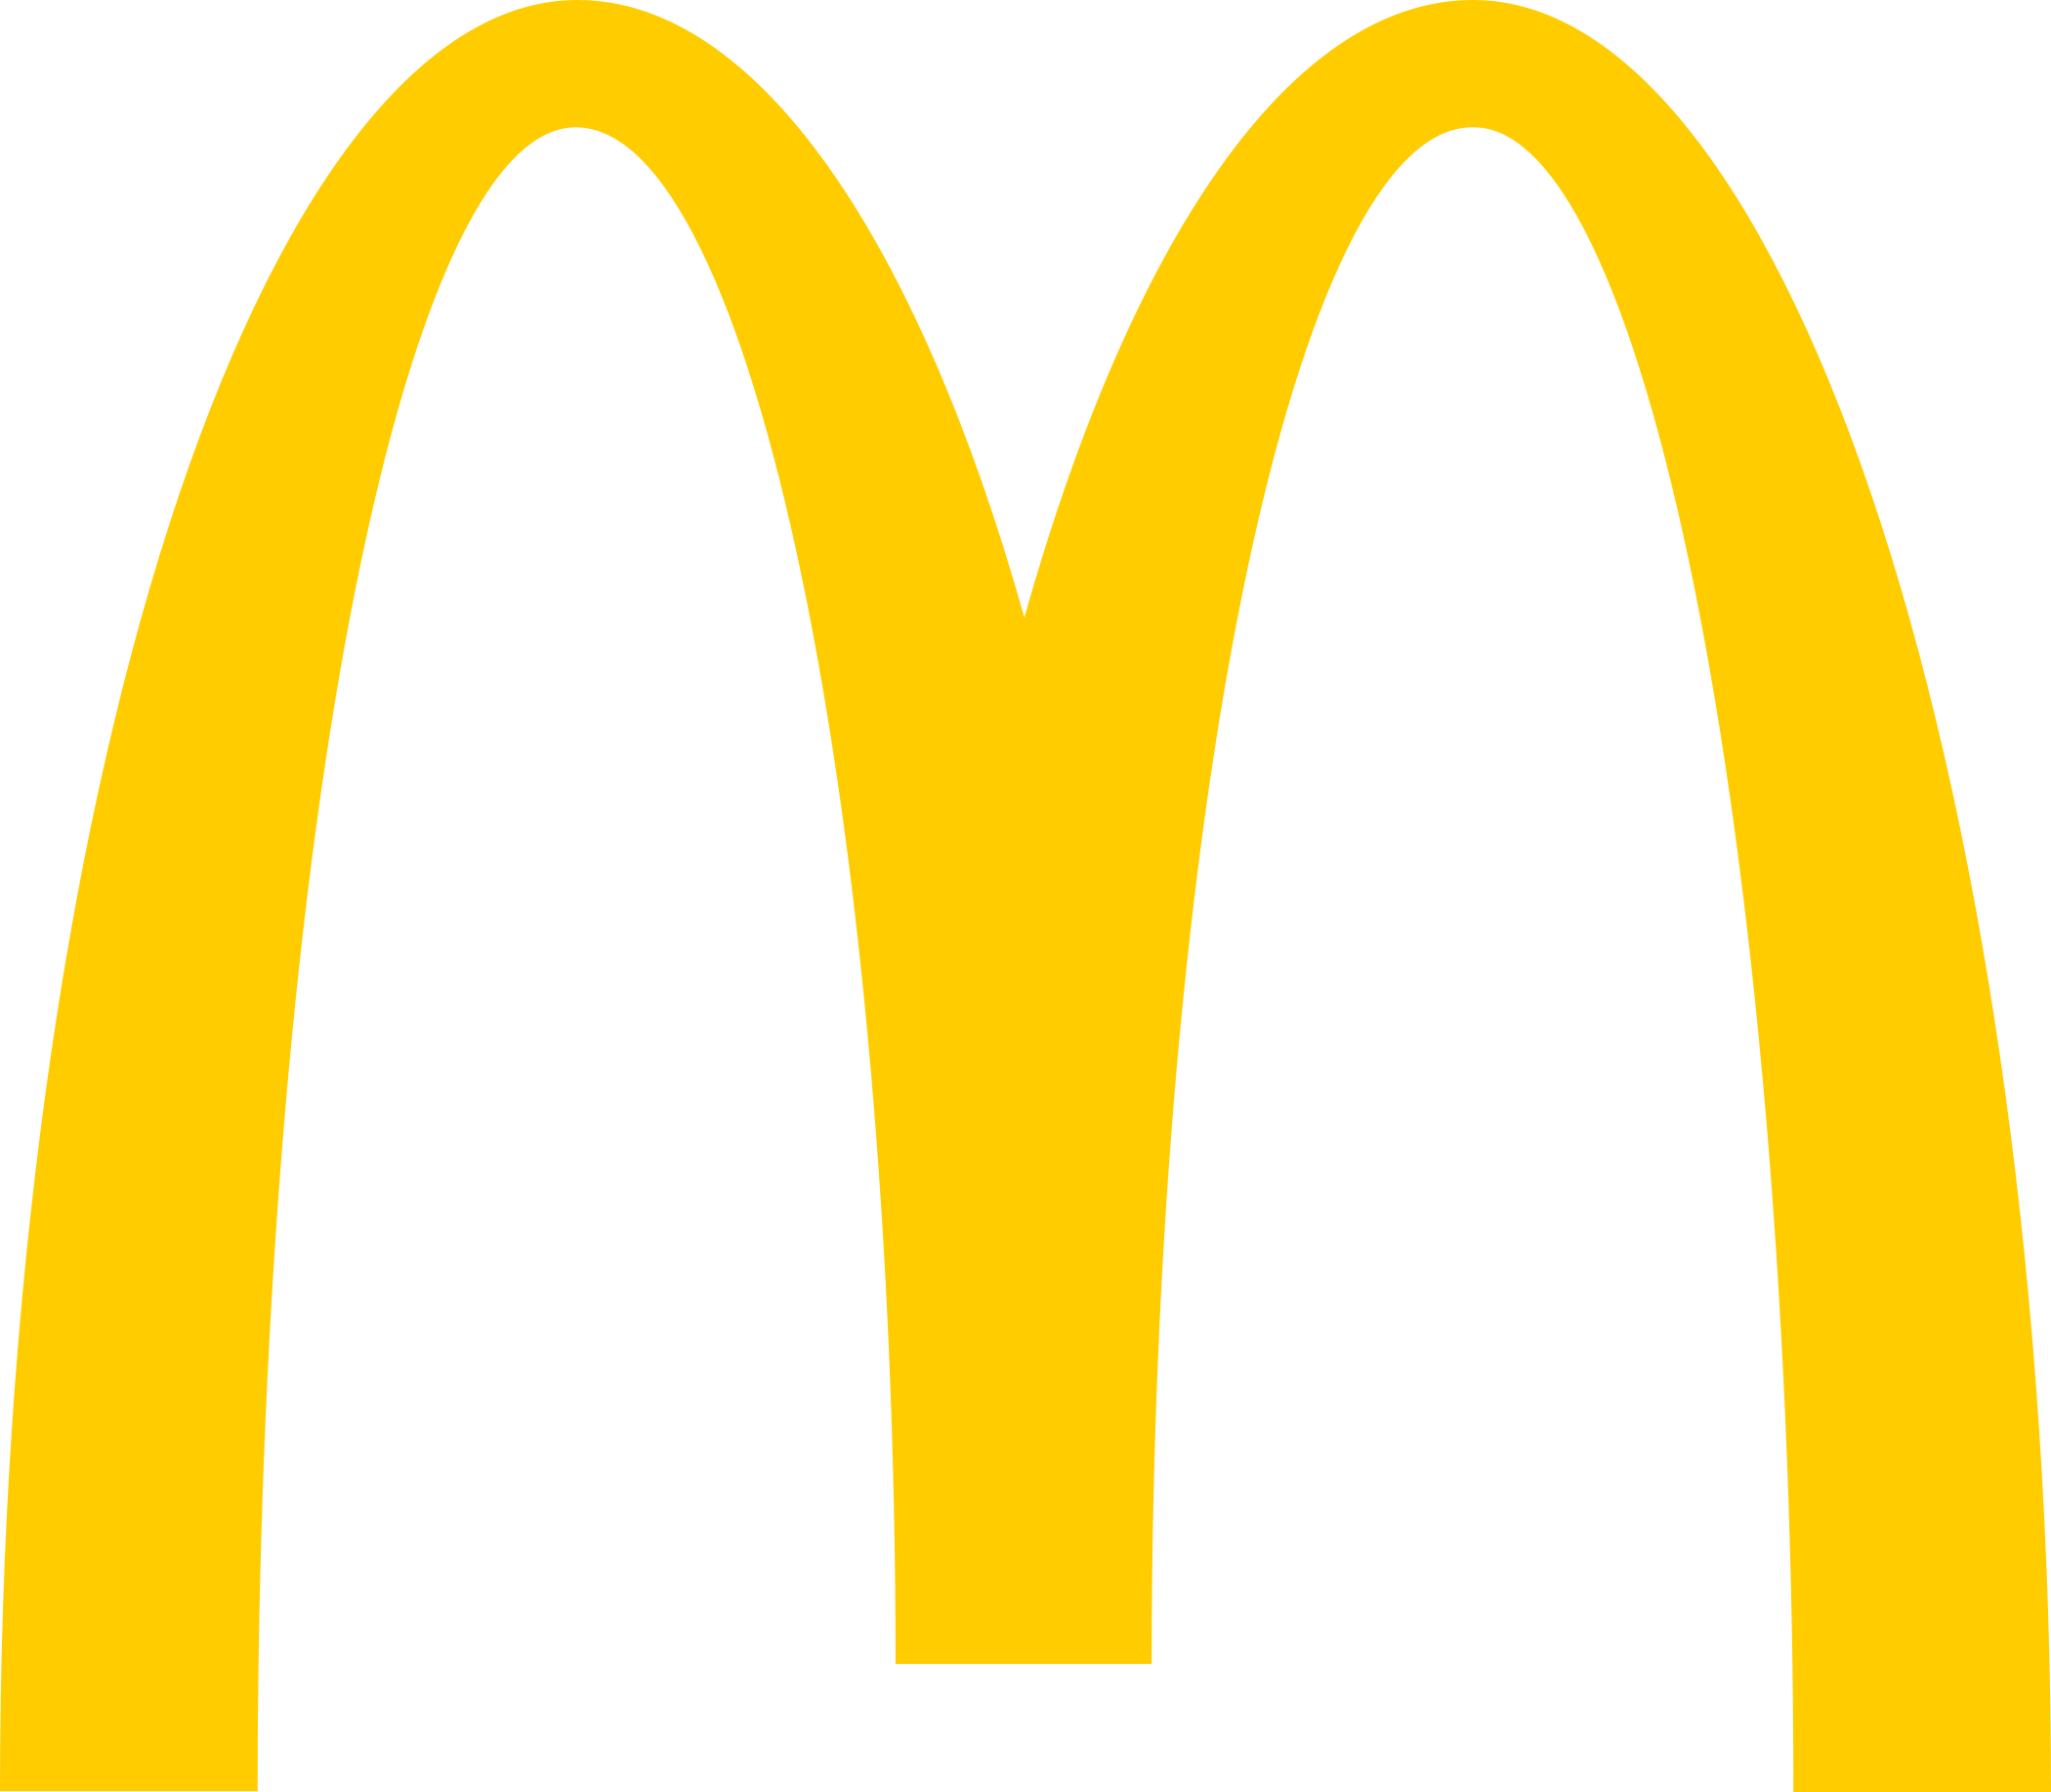 McDonalds-logo-2